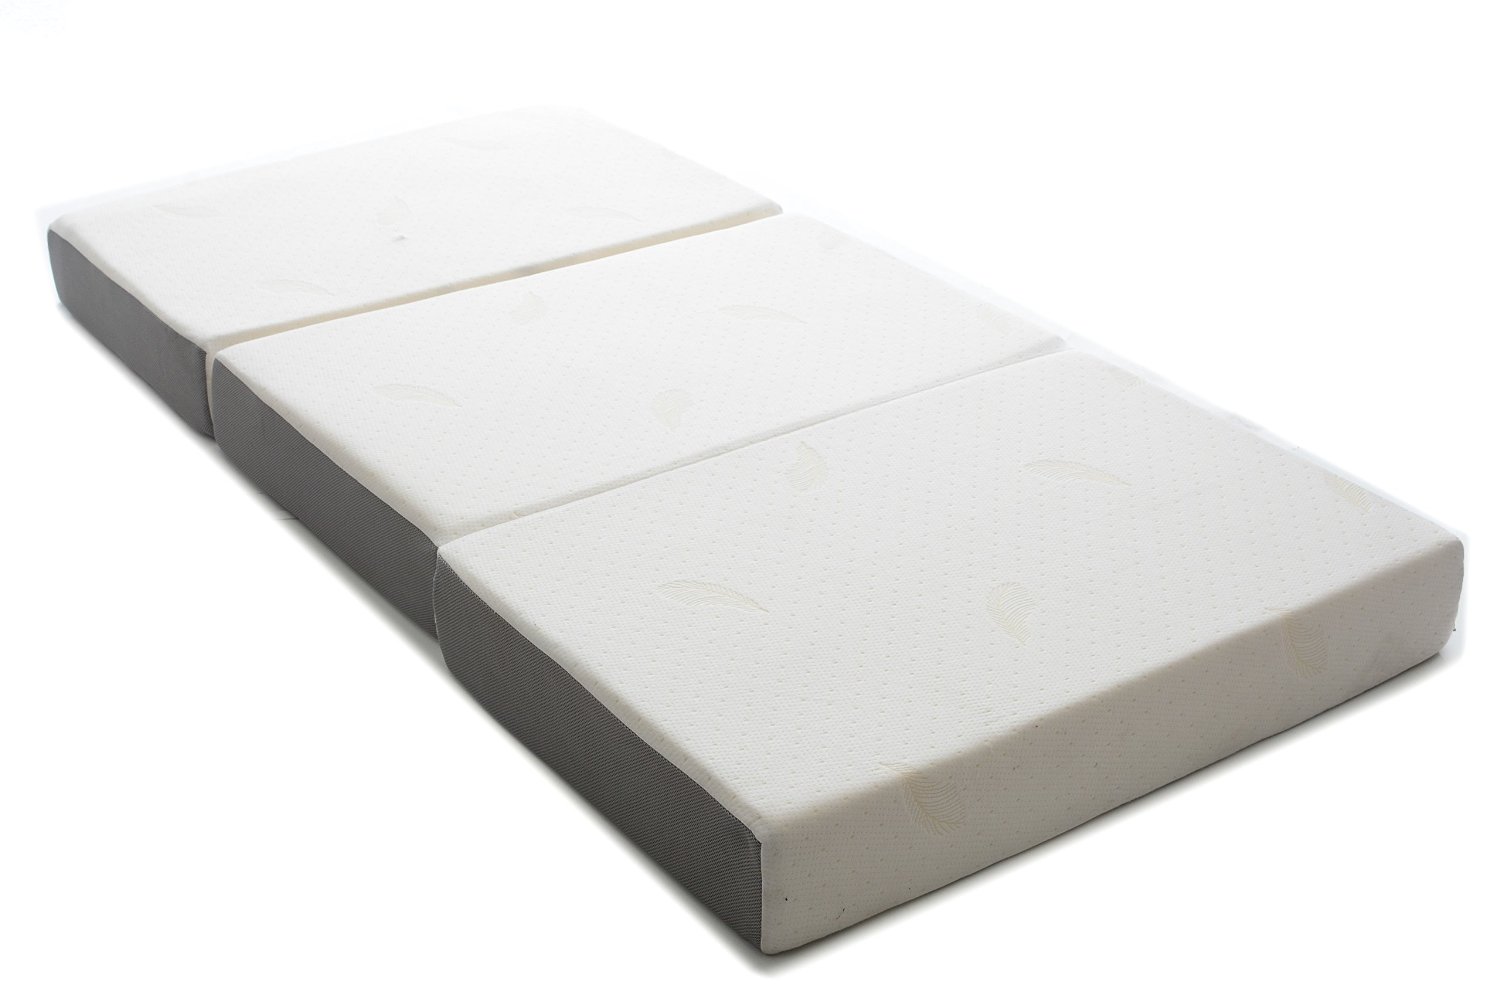 6 inch fold memory foam mattress